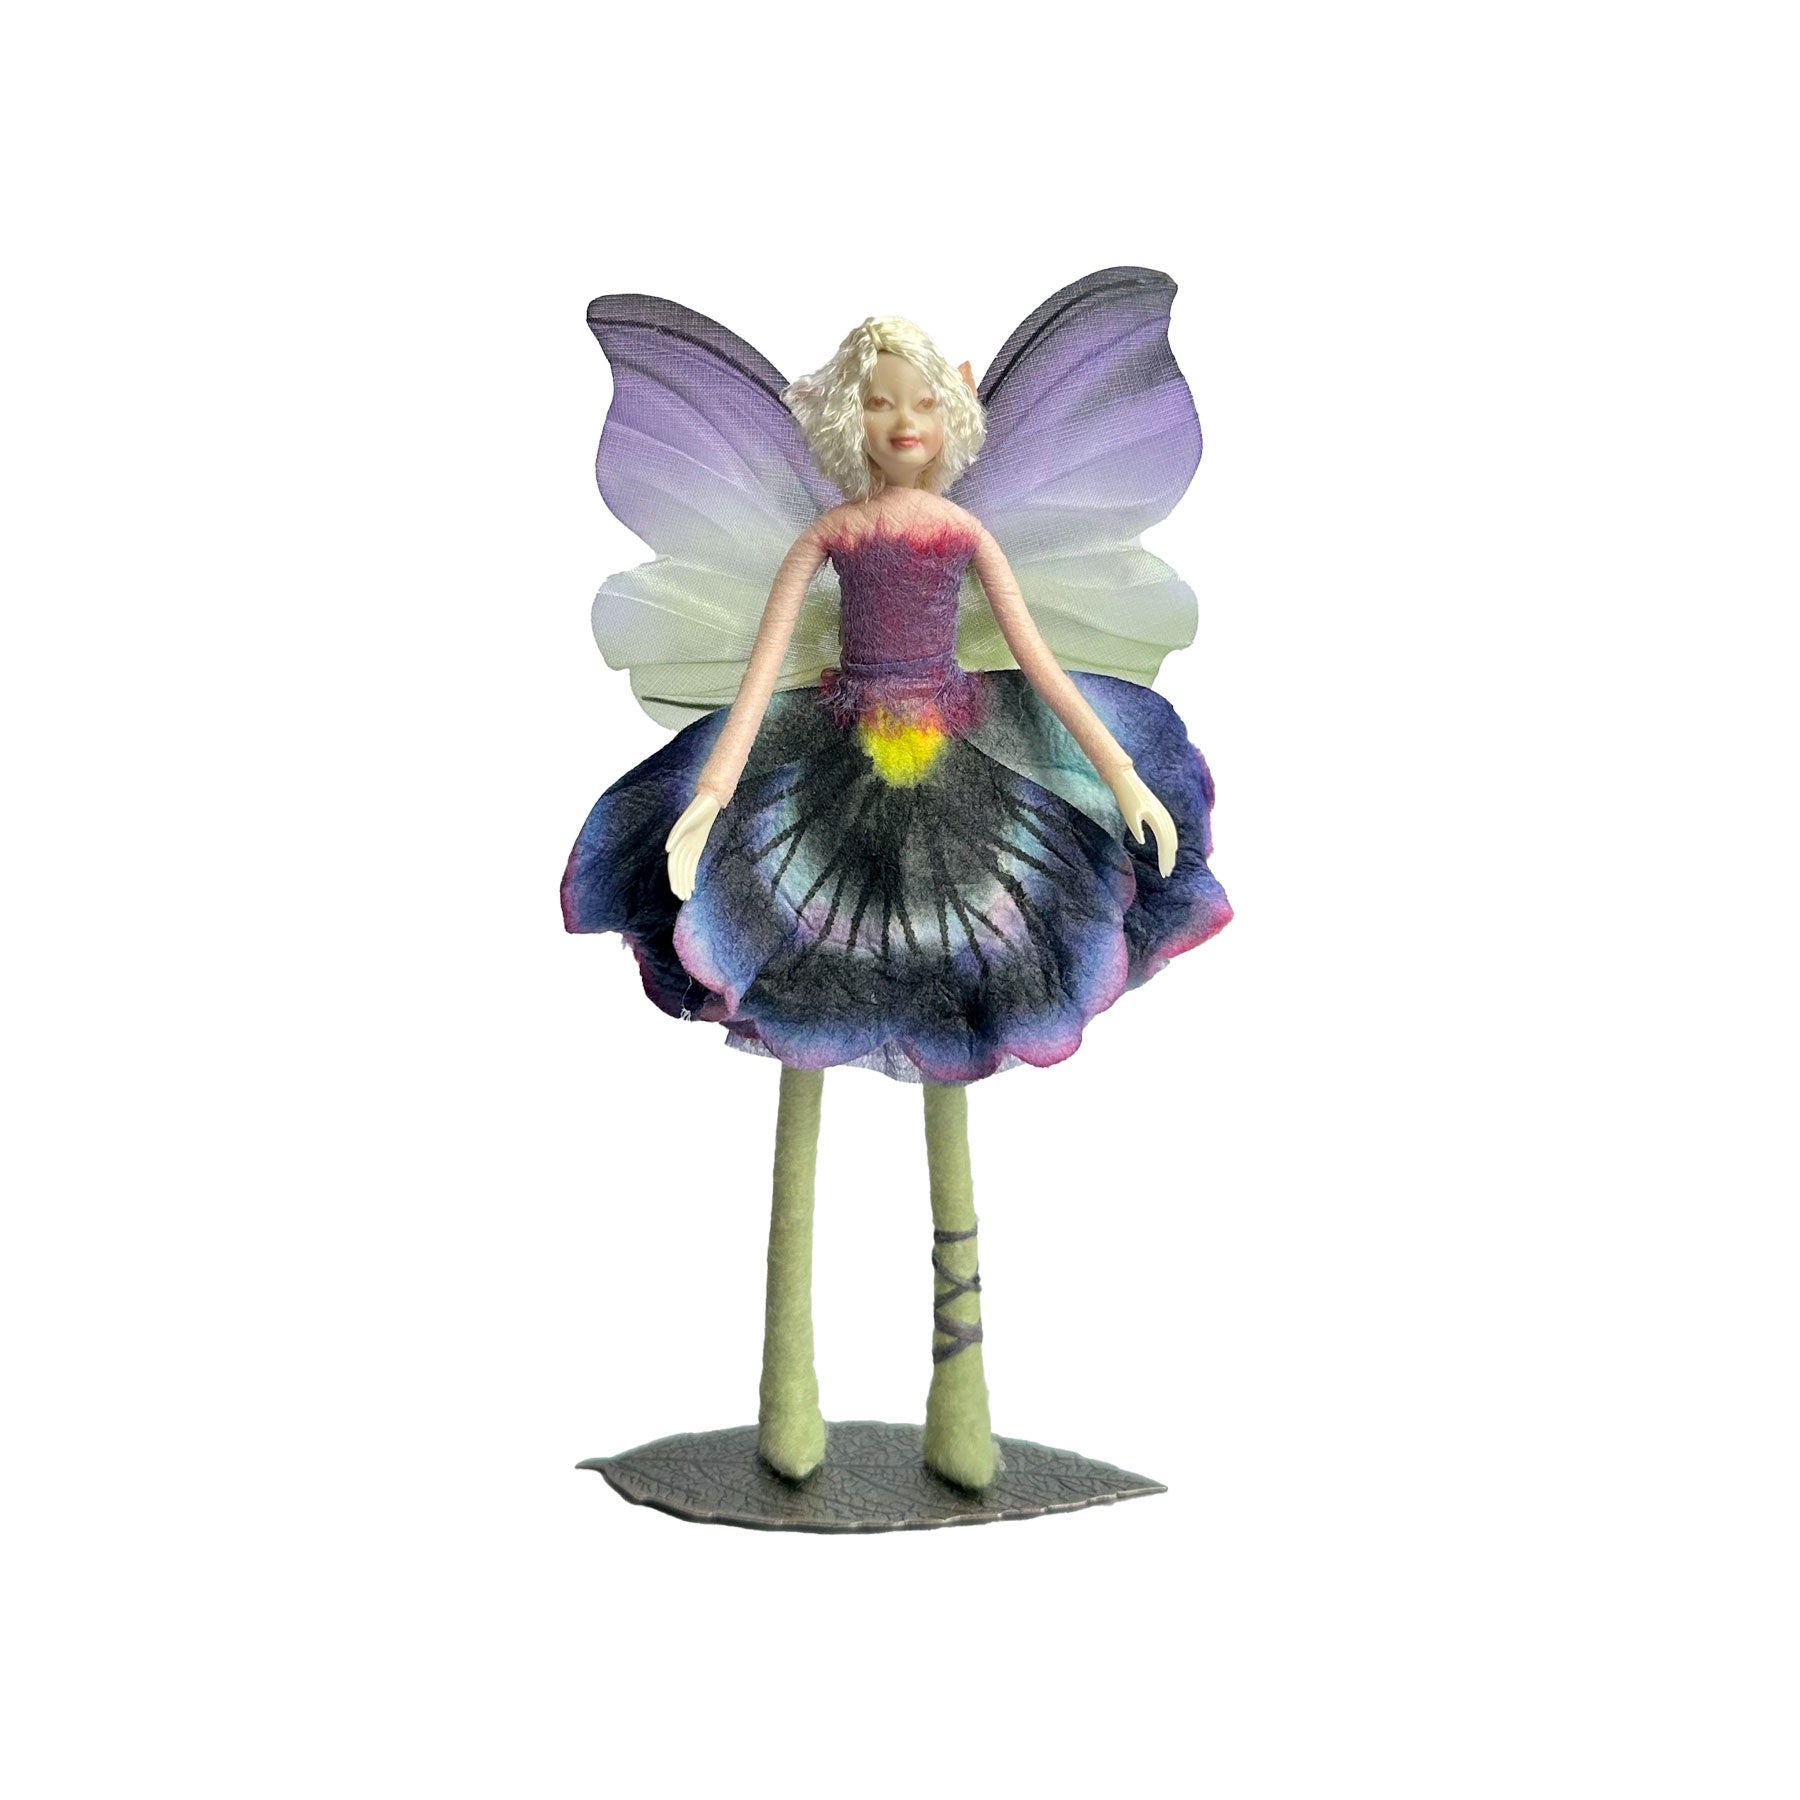 Viola the Fairy